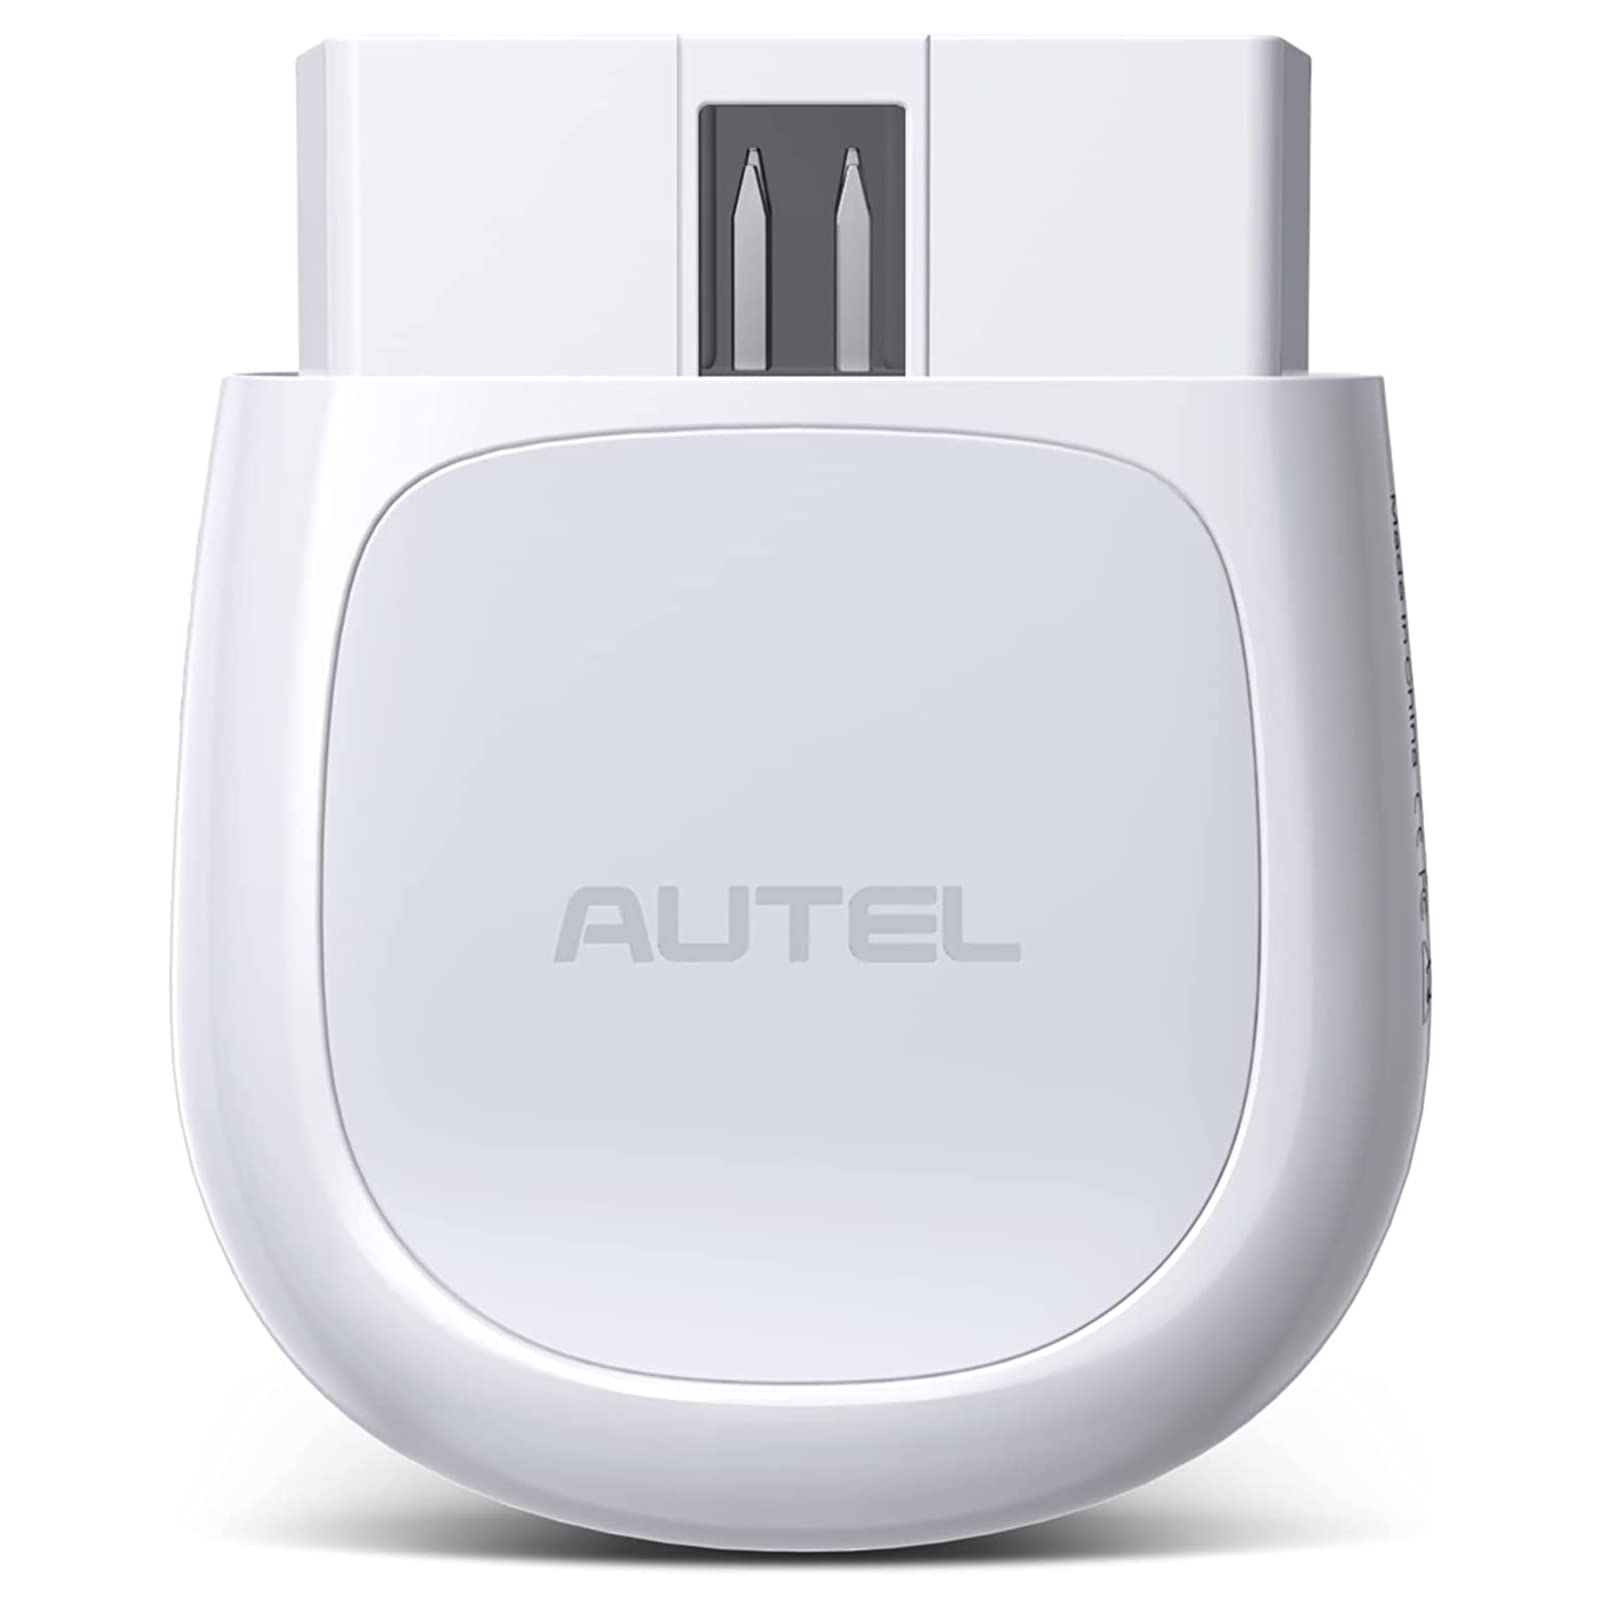 Autel AP200 obd2 故障診断機 自動車スキャナー フルシステム診断 AutoVIN、オイル/EPB/BMS/SAS/TPMS/DPFリセット IMMOサービス ファミリーDIY用 iPhone Android 使用可能